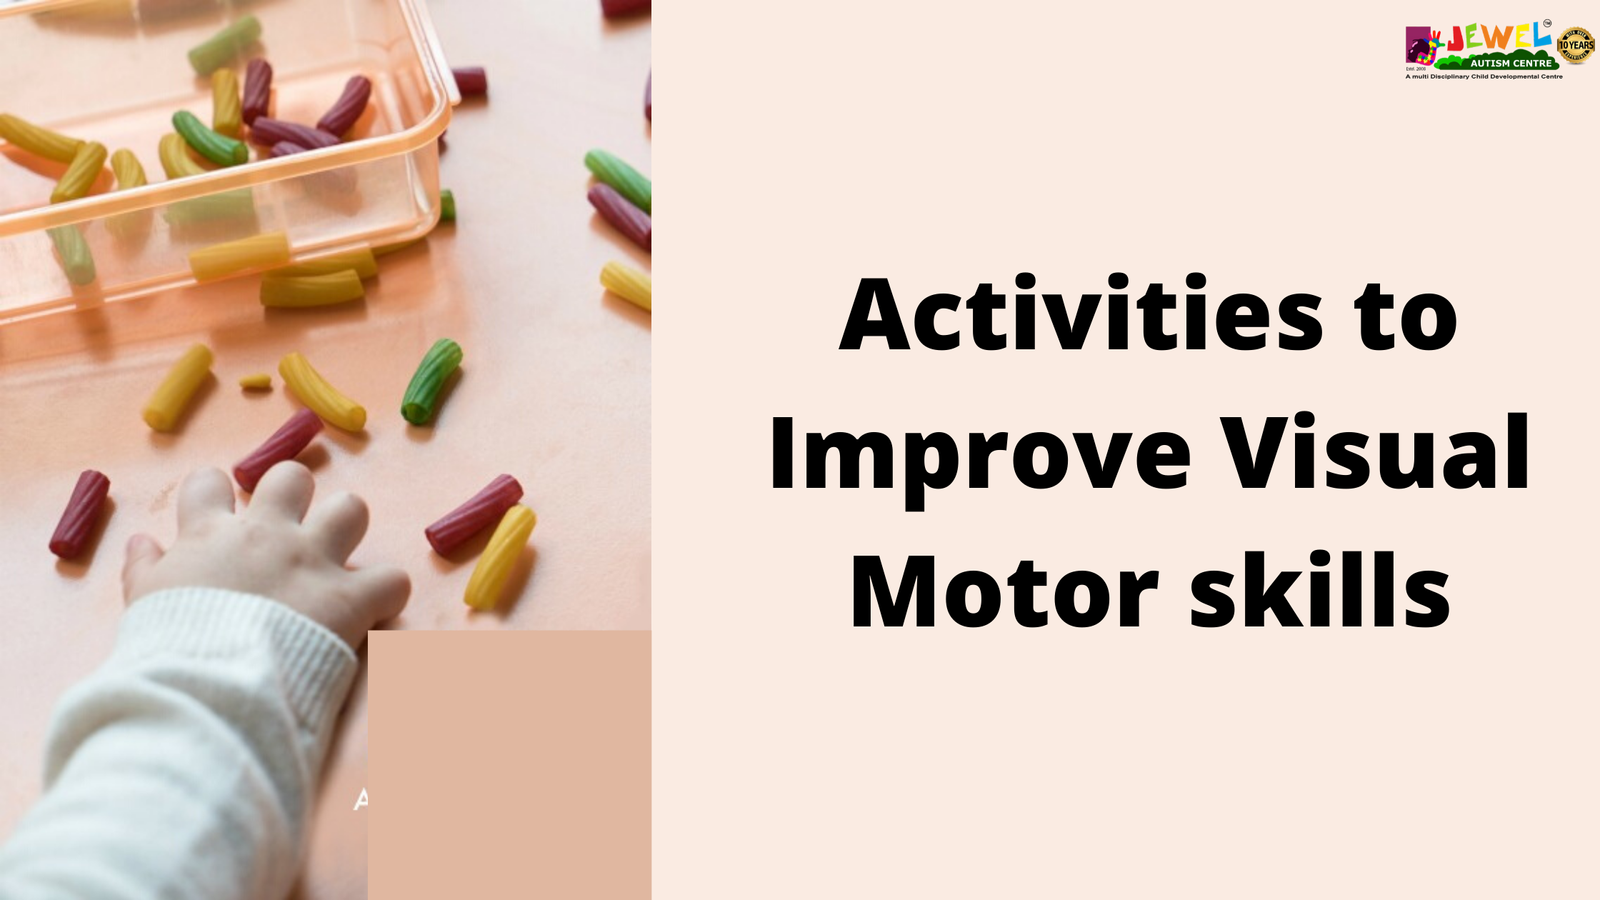 Activities-to-Improve-Visual-Motor-skills.png